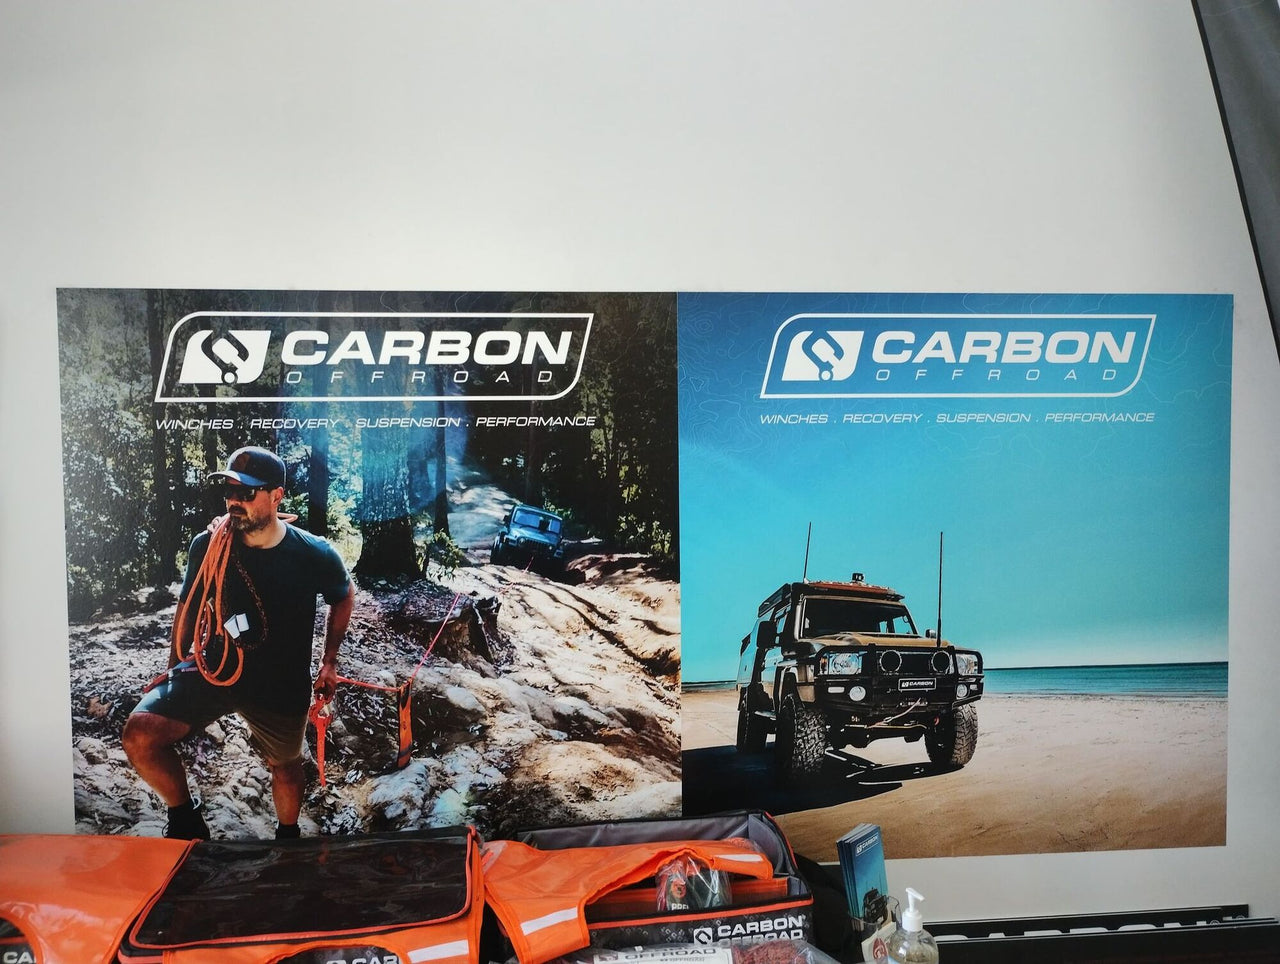 Carbon Offroad Vinyl Wall Banner Sticker 1200 x 1200mm BEACH - CW-VS-12-BE 1